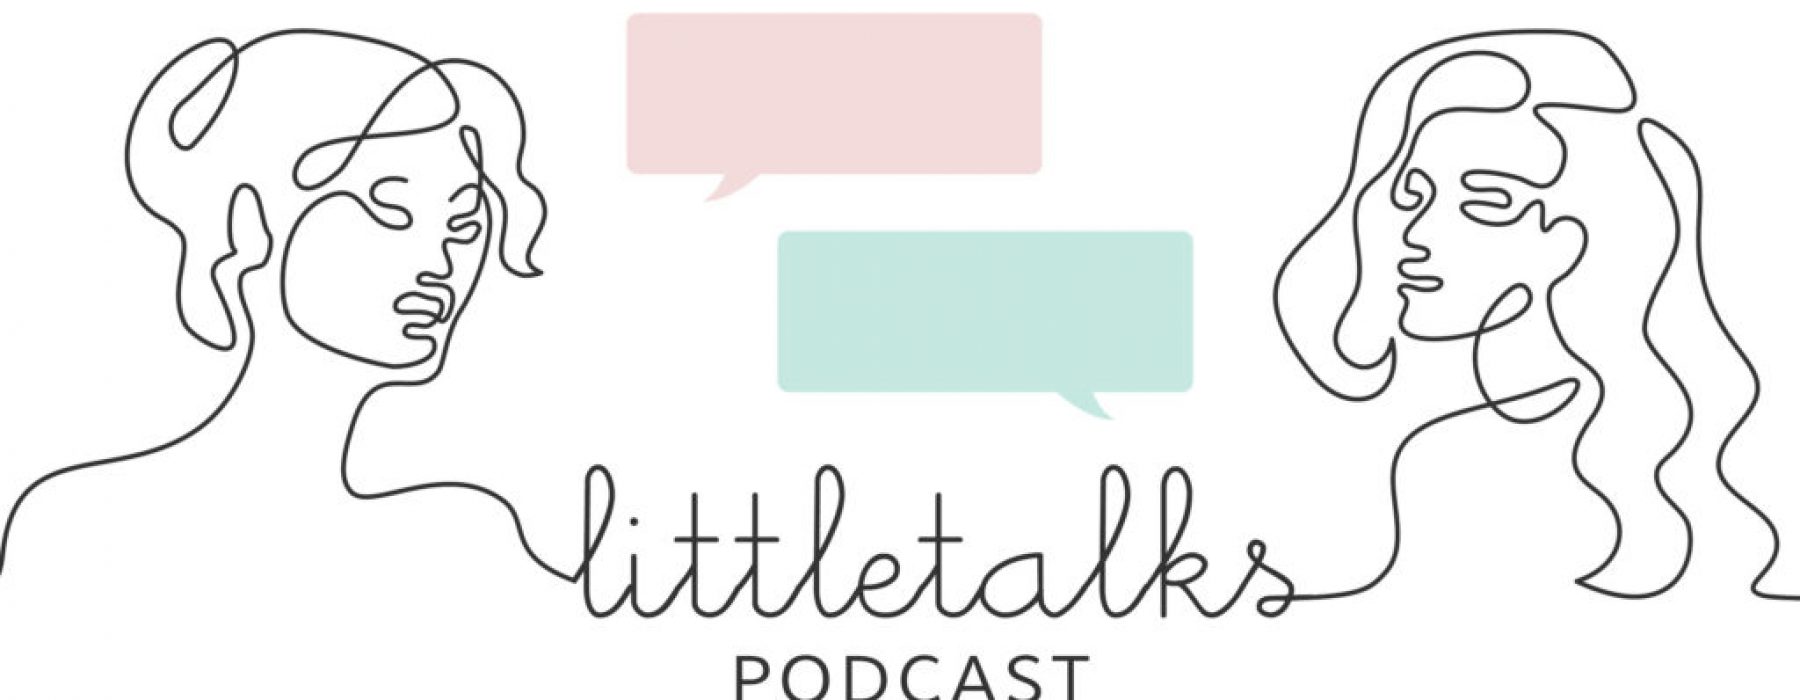 littletalks-logo-official-1024x1024